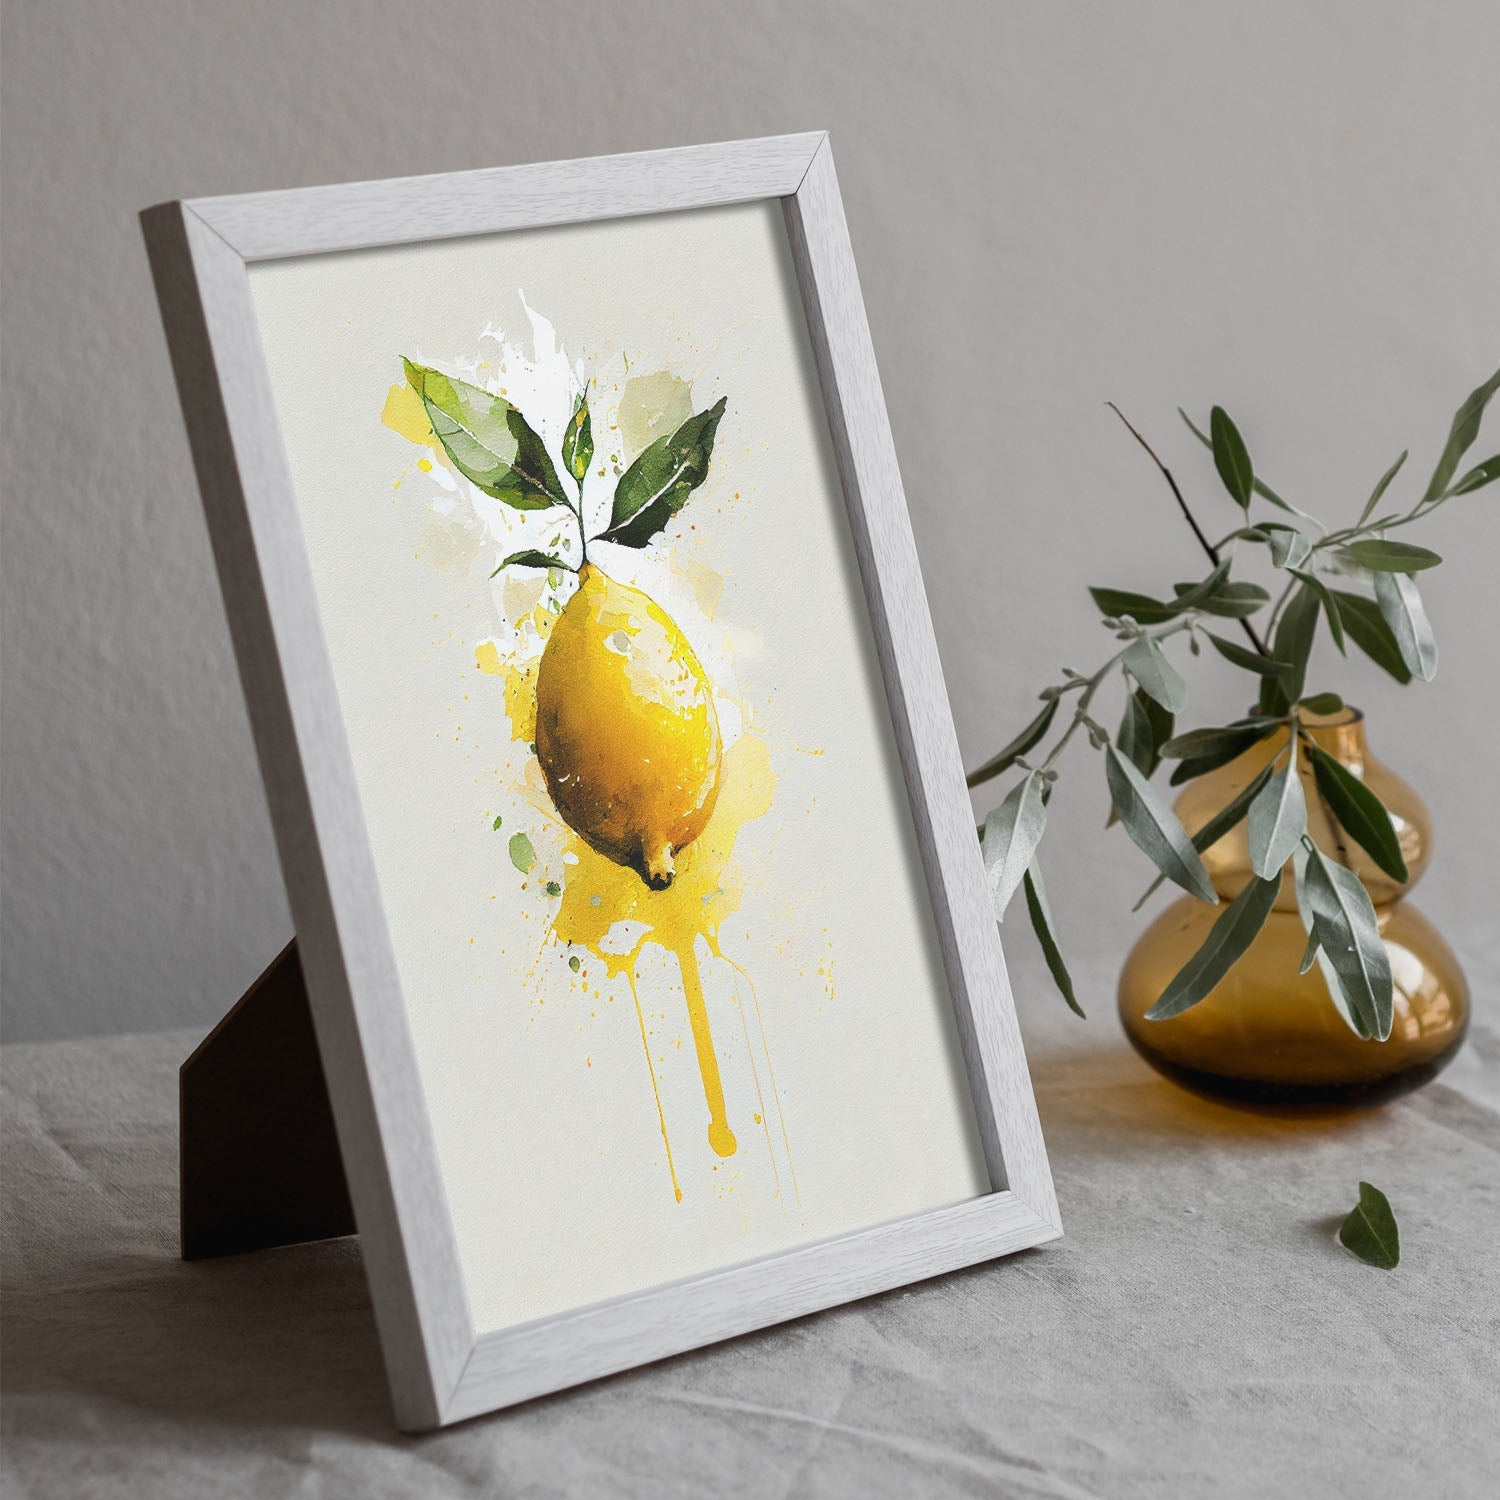 Nacnic minimalist Lemon. Aesthetic Wall Art Prints for Bedroom or Living Room Design.-Artwork-Nacnic-A4-Sin Marco-Nacnic Estudio SL